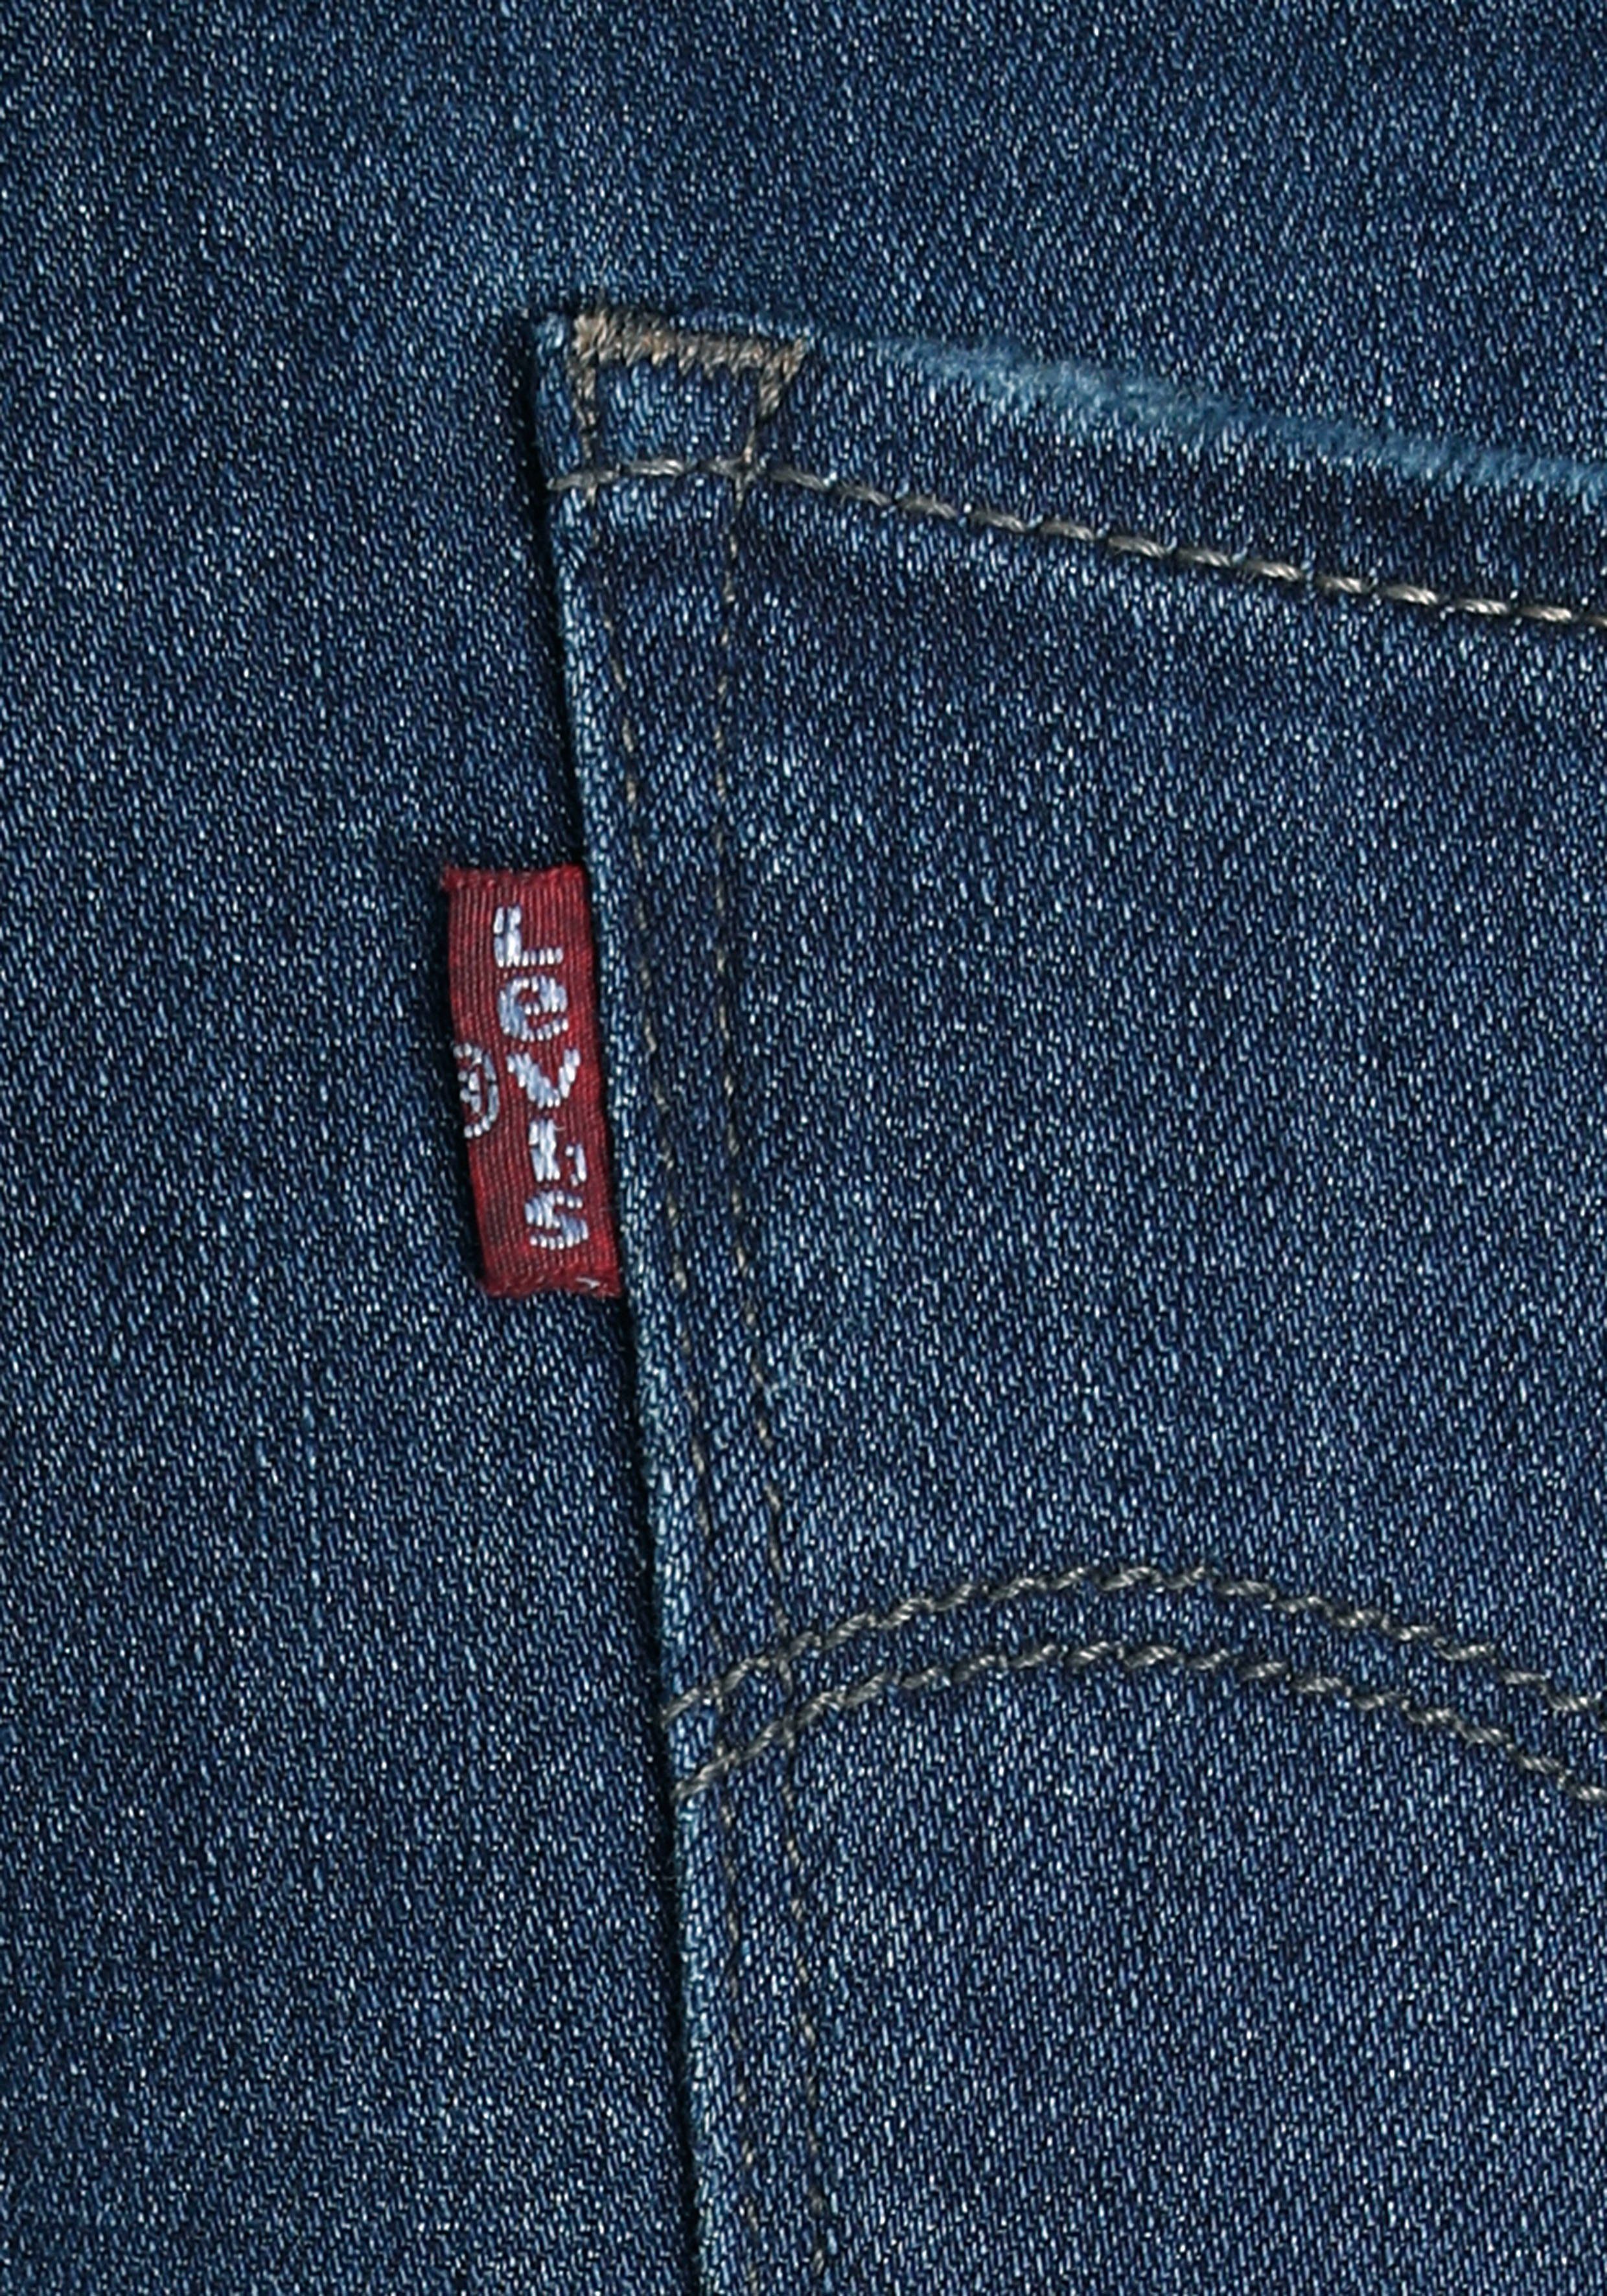 311 Slim-fit-Jeans Shaping worn indigo dark in 5-Pocket-Stil im Skinny Levi's®